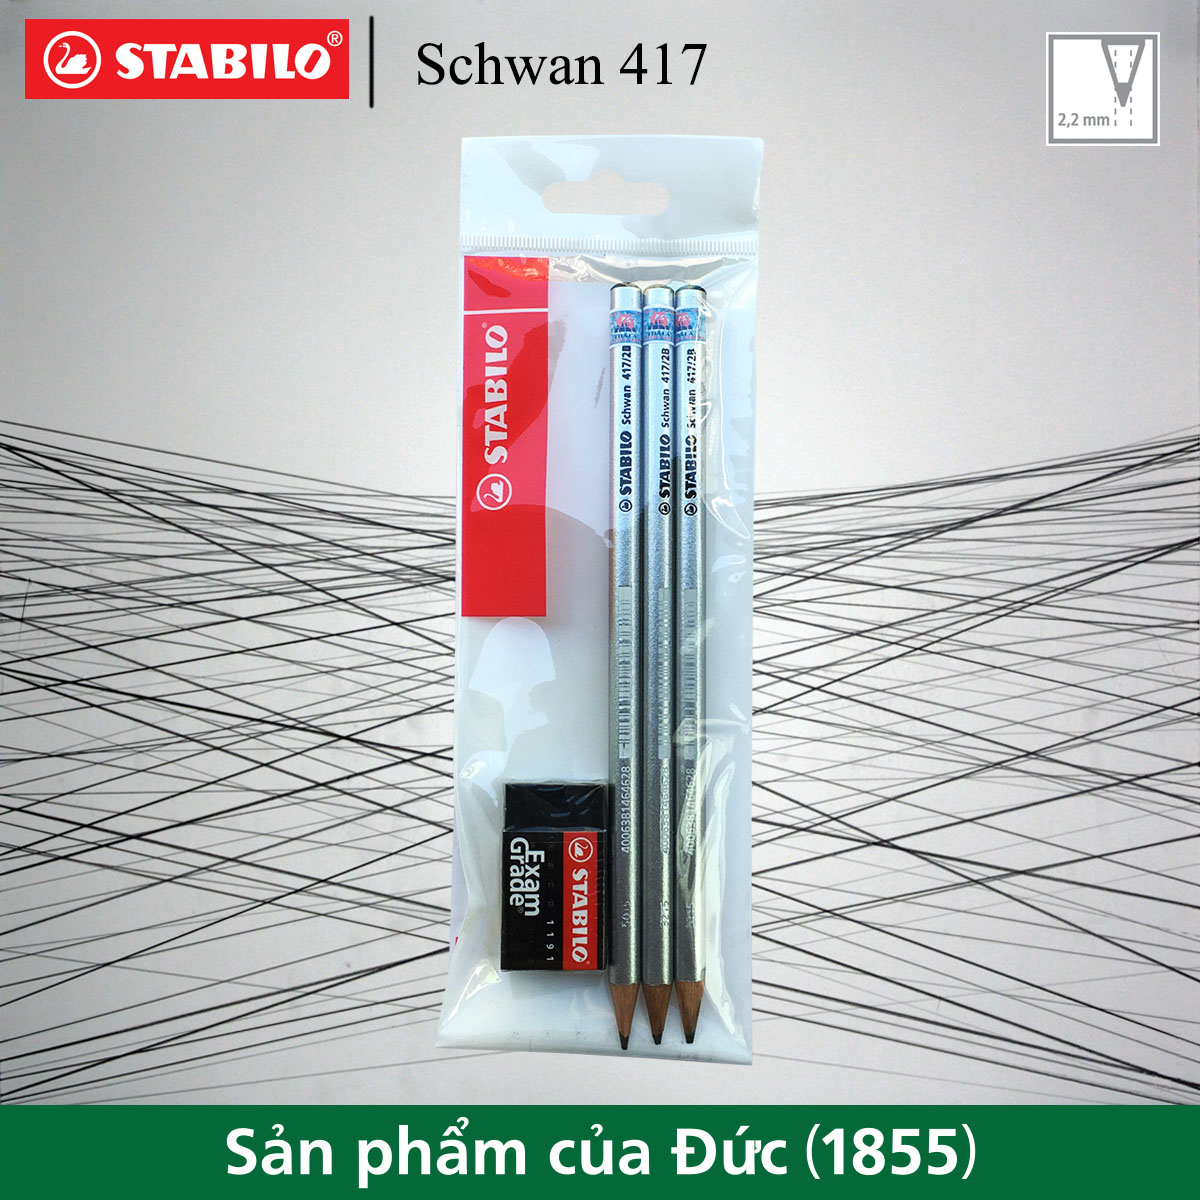 Bộ 3 bút chì gỗ STABILO Schwan 417 màu bạc